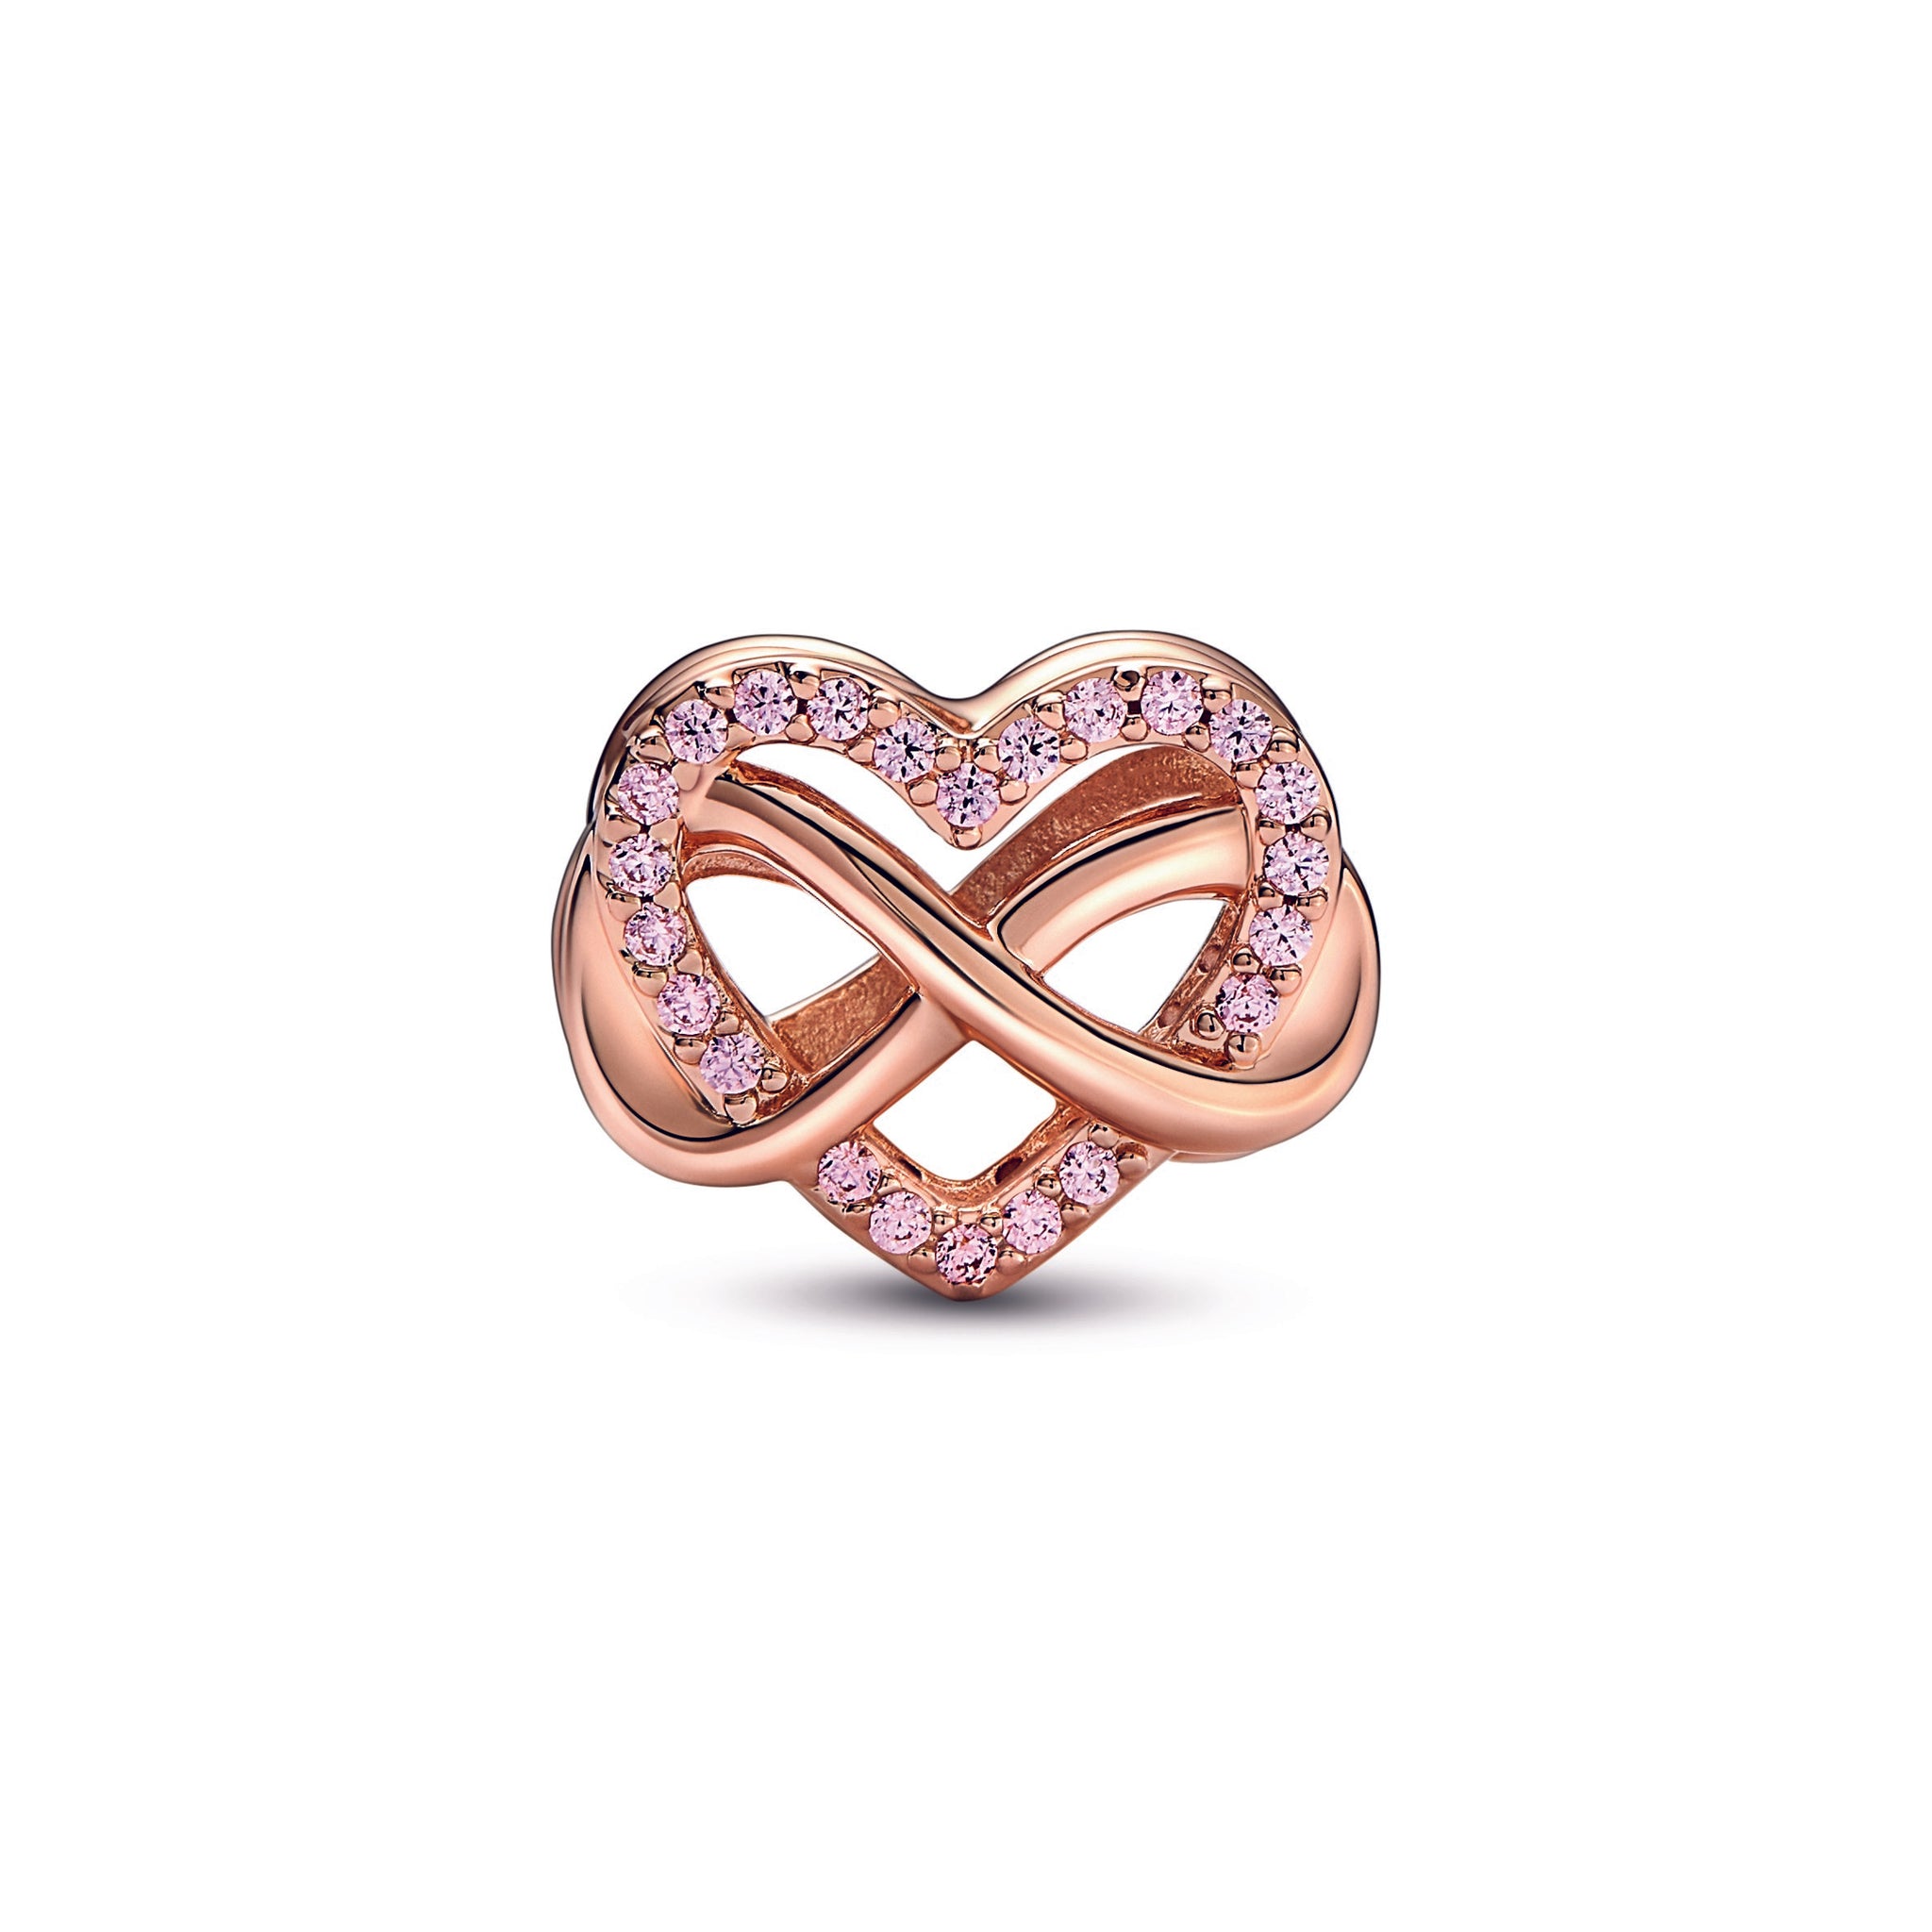 Metallic Pink Heart Charm, PANDORA